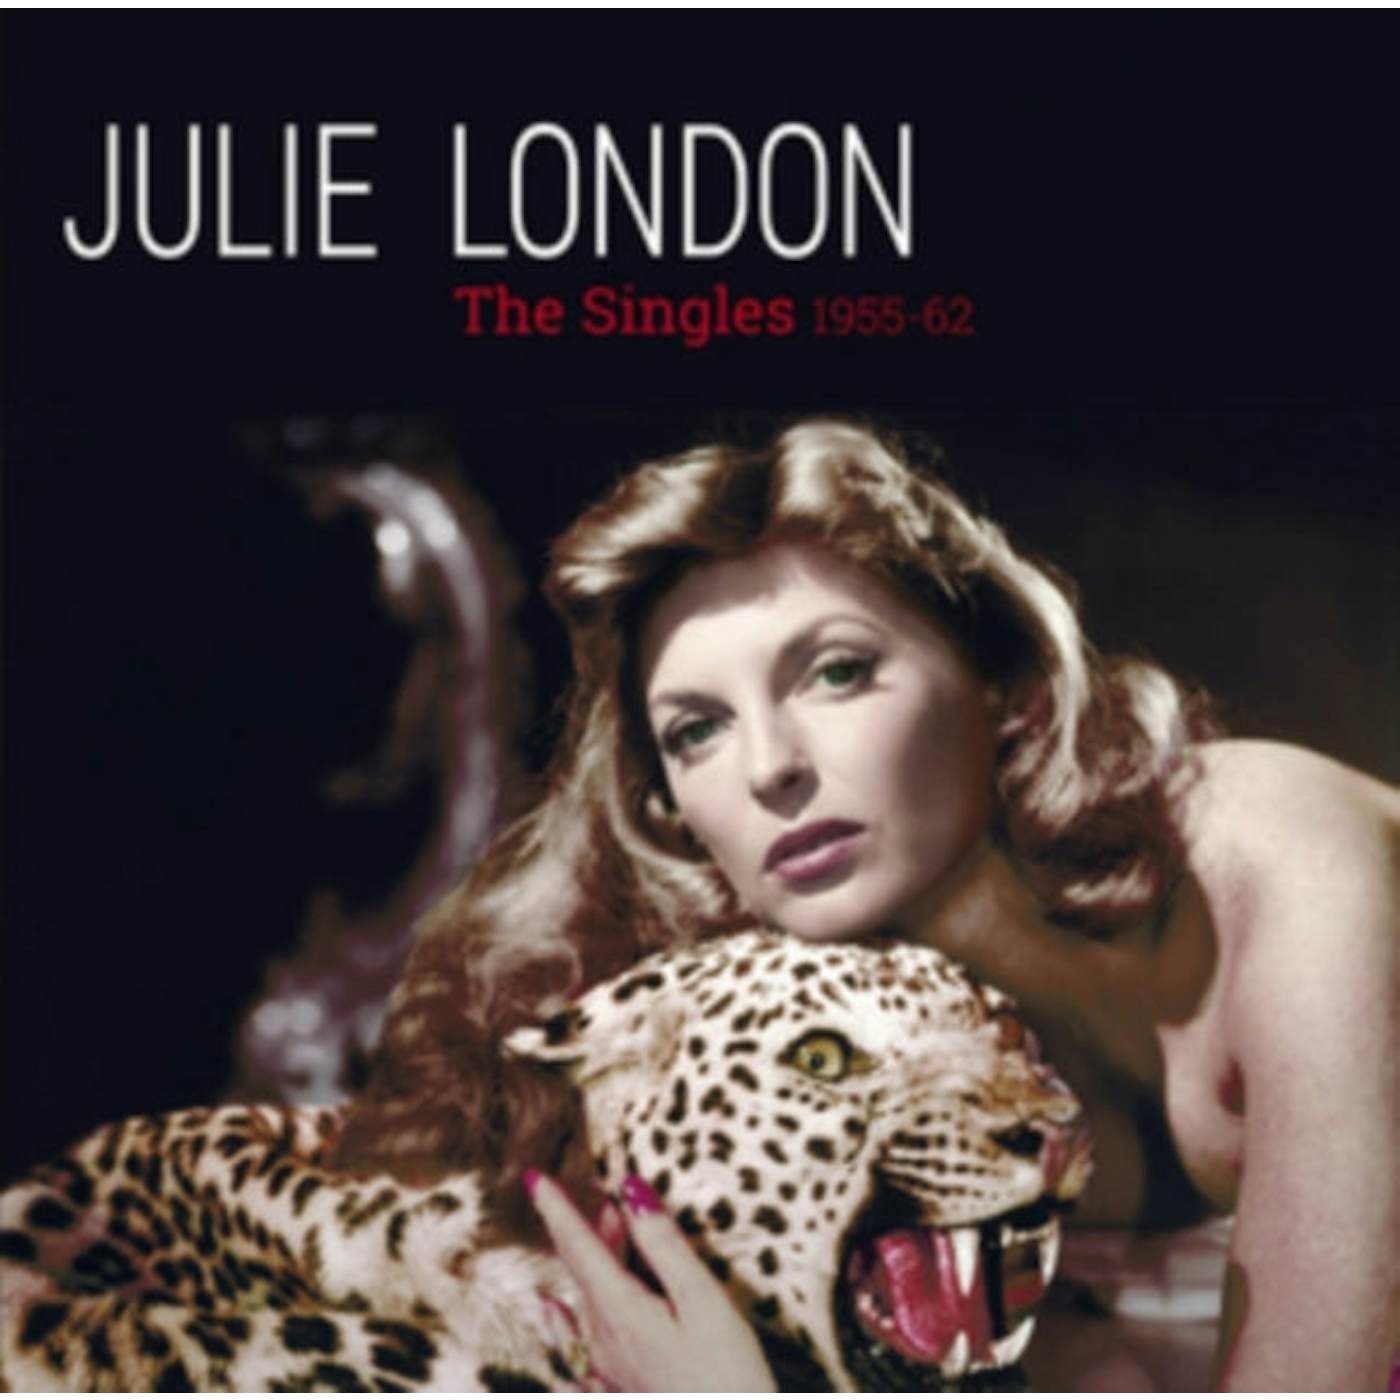 Julie London CD - Complete 19 55-19 62 Singles